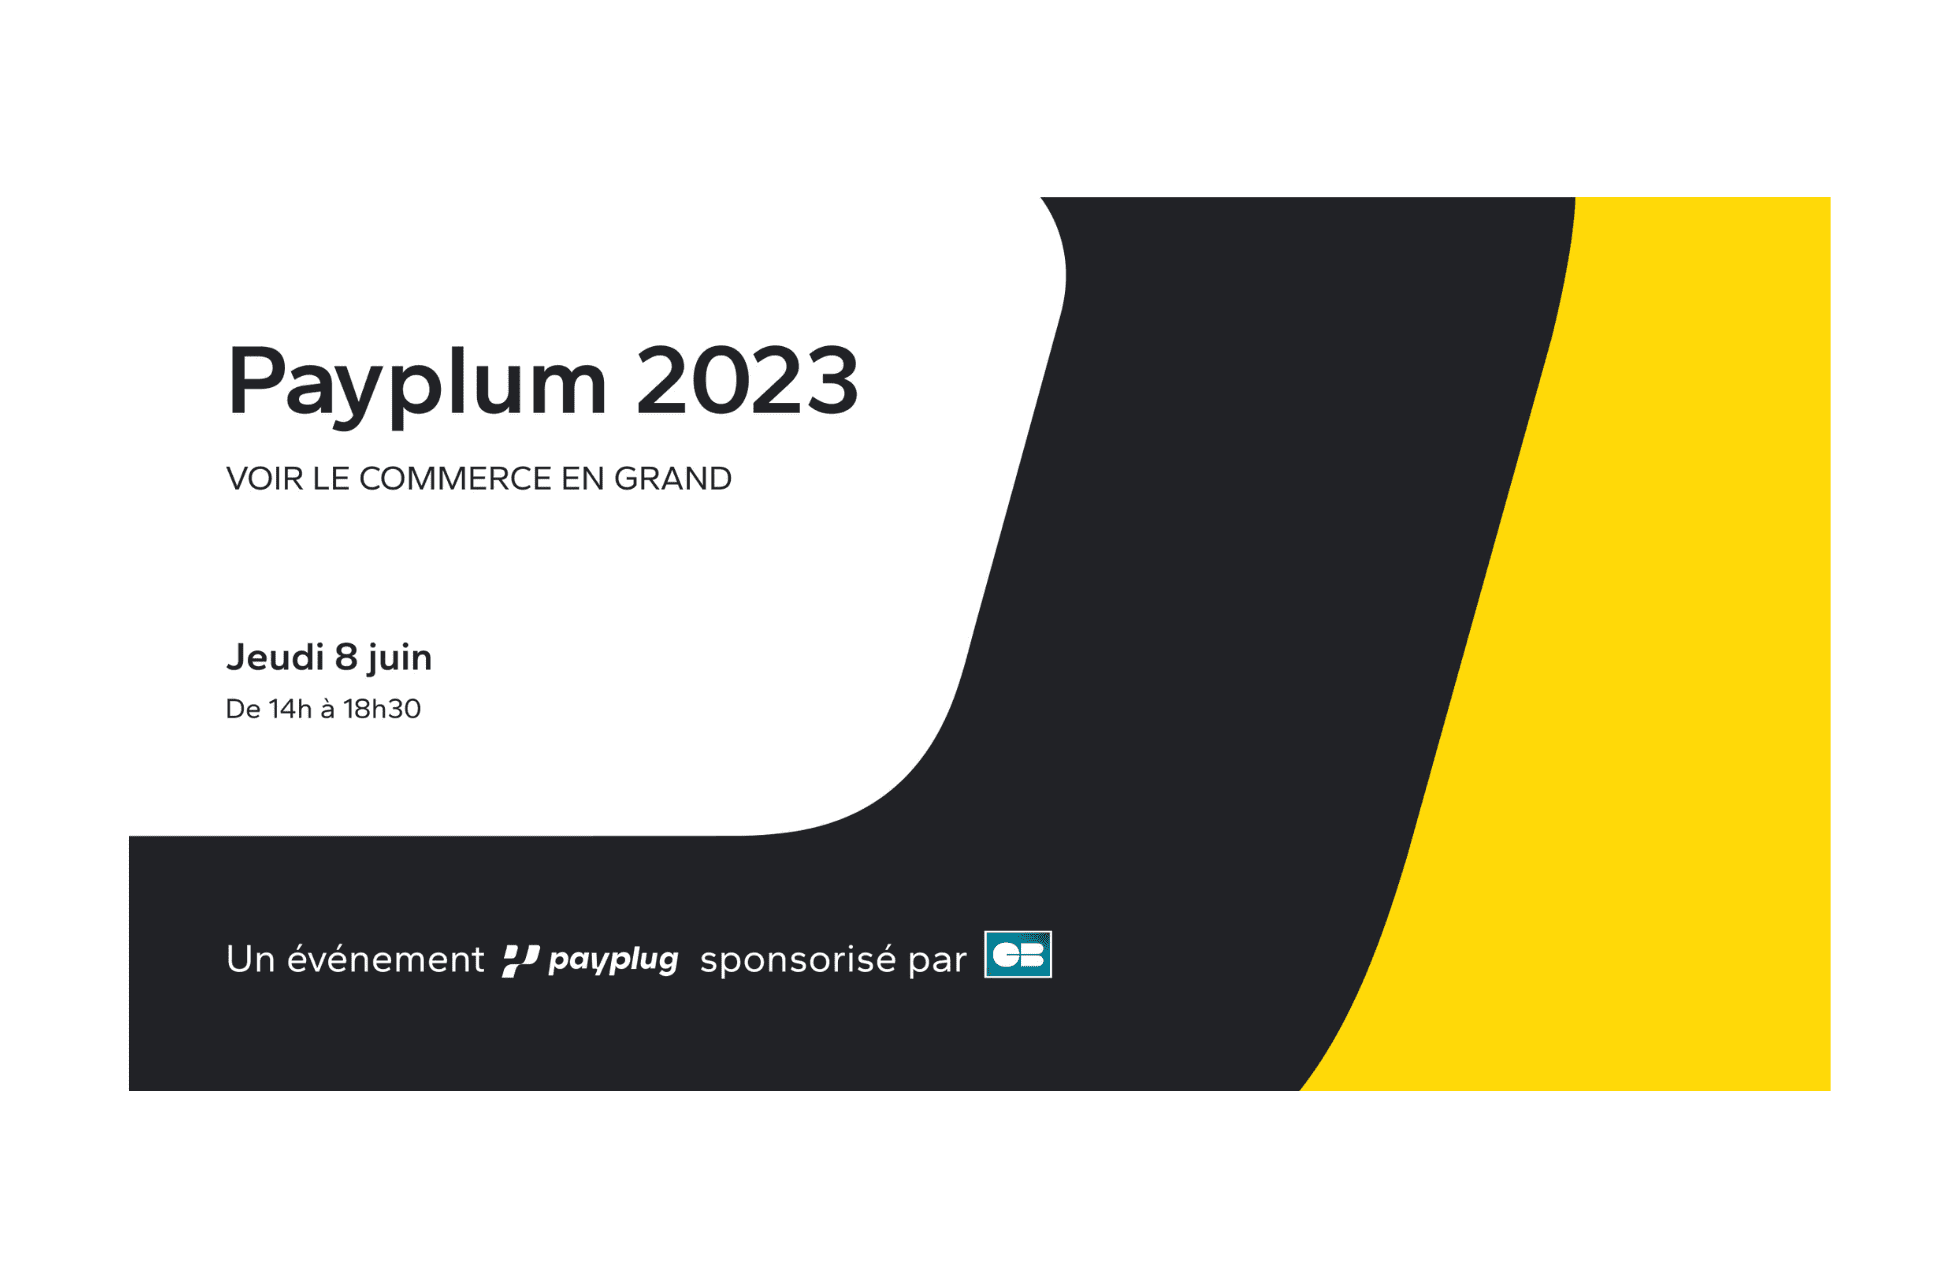 payplum 2023